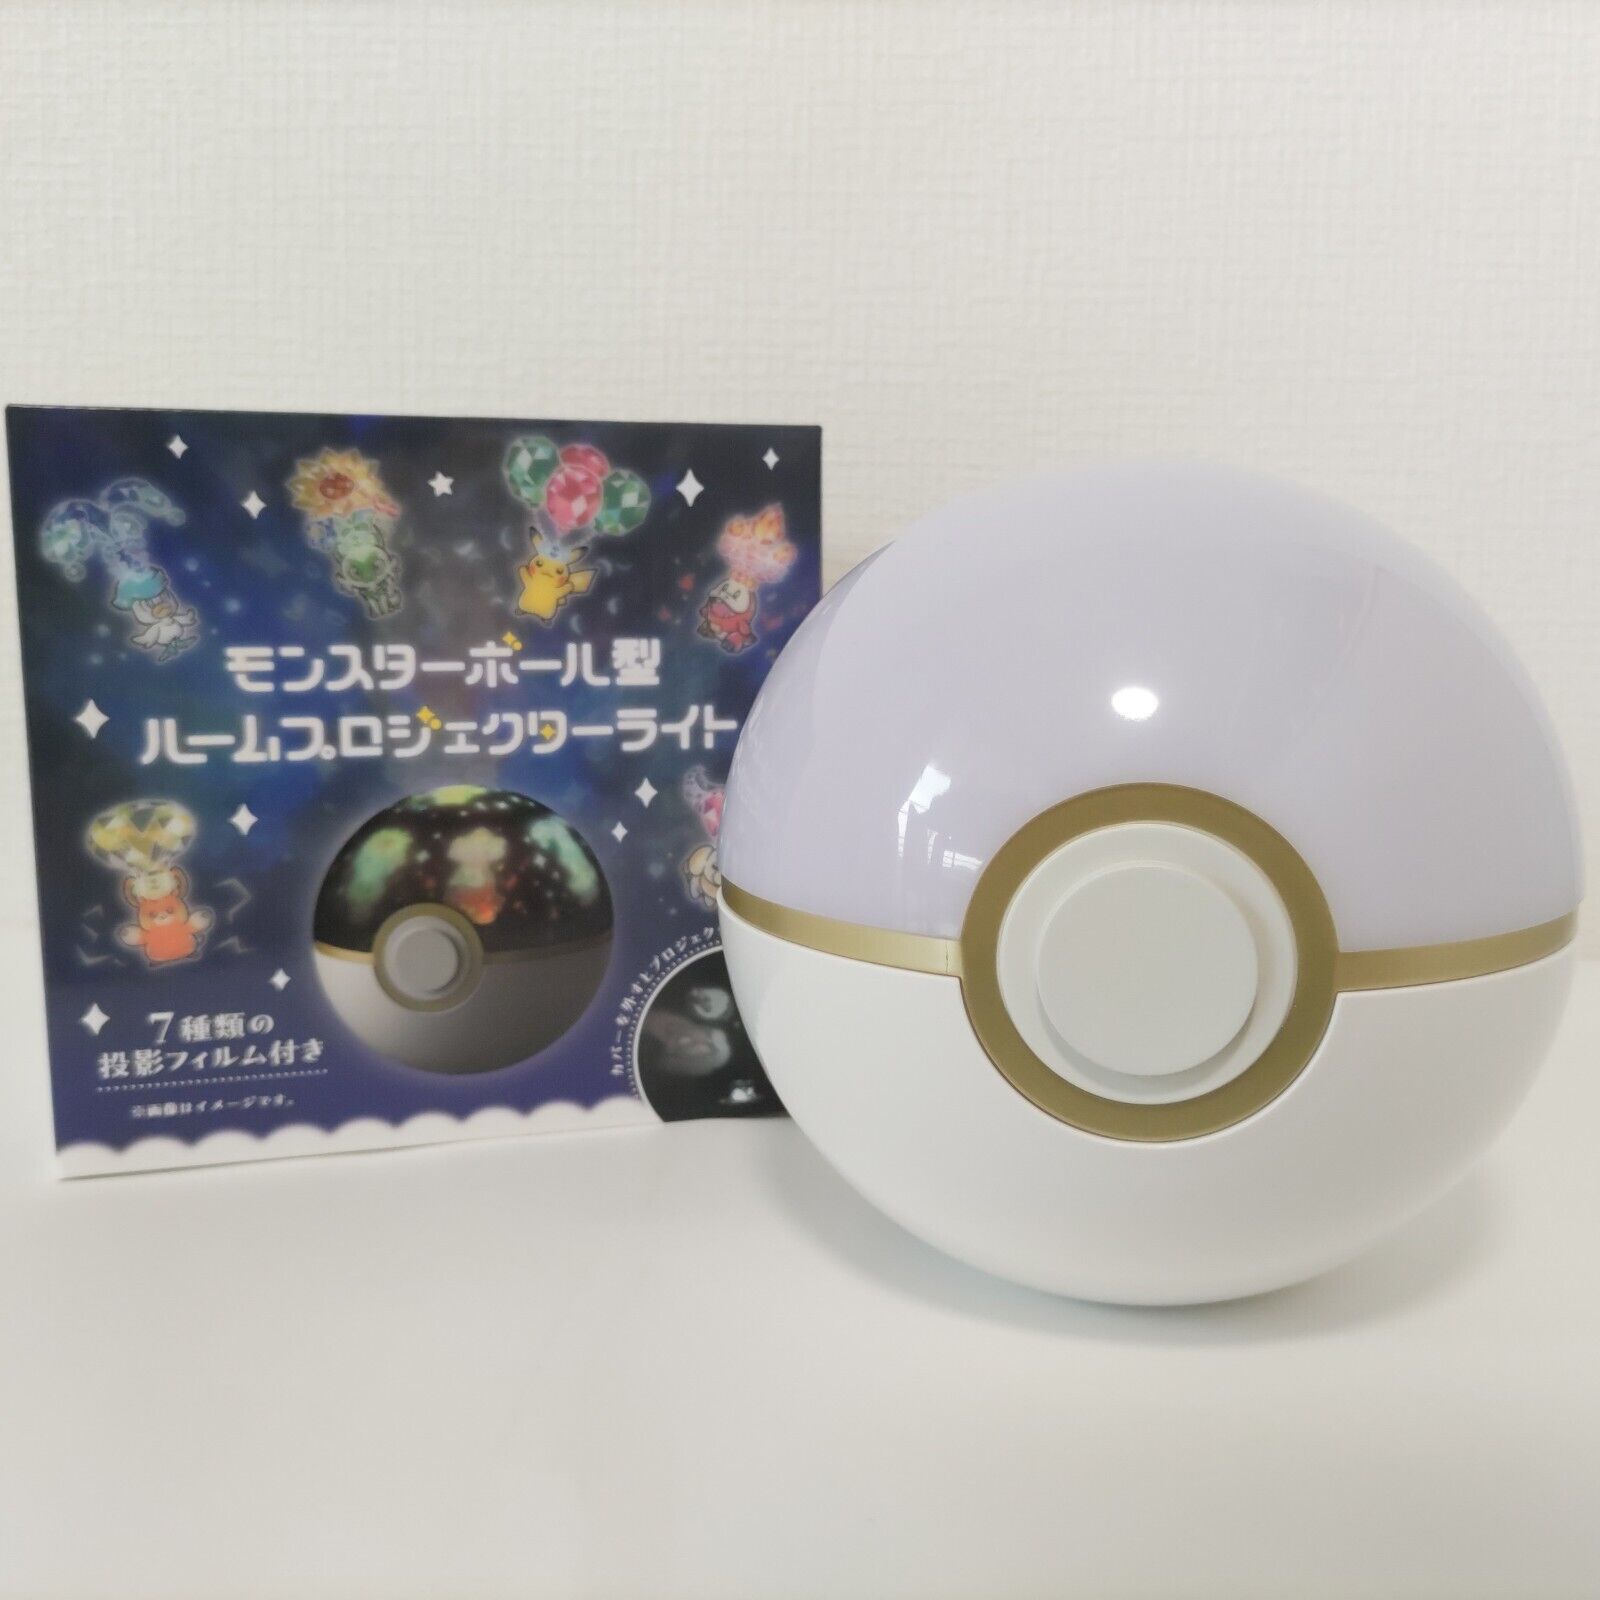 Pokemon Center Original Poke-Ball Shaped Room Projector Light Japan Limited New